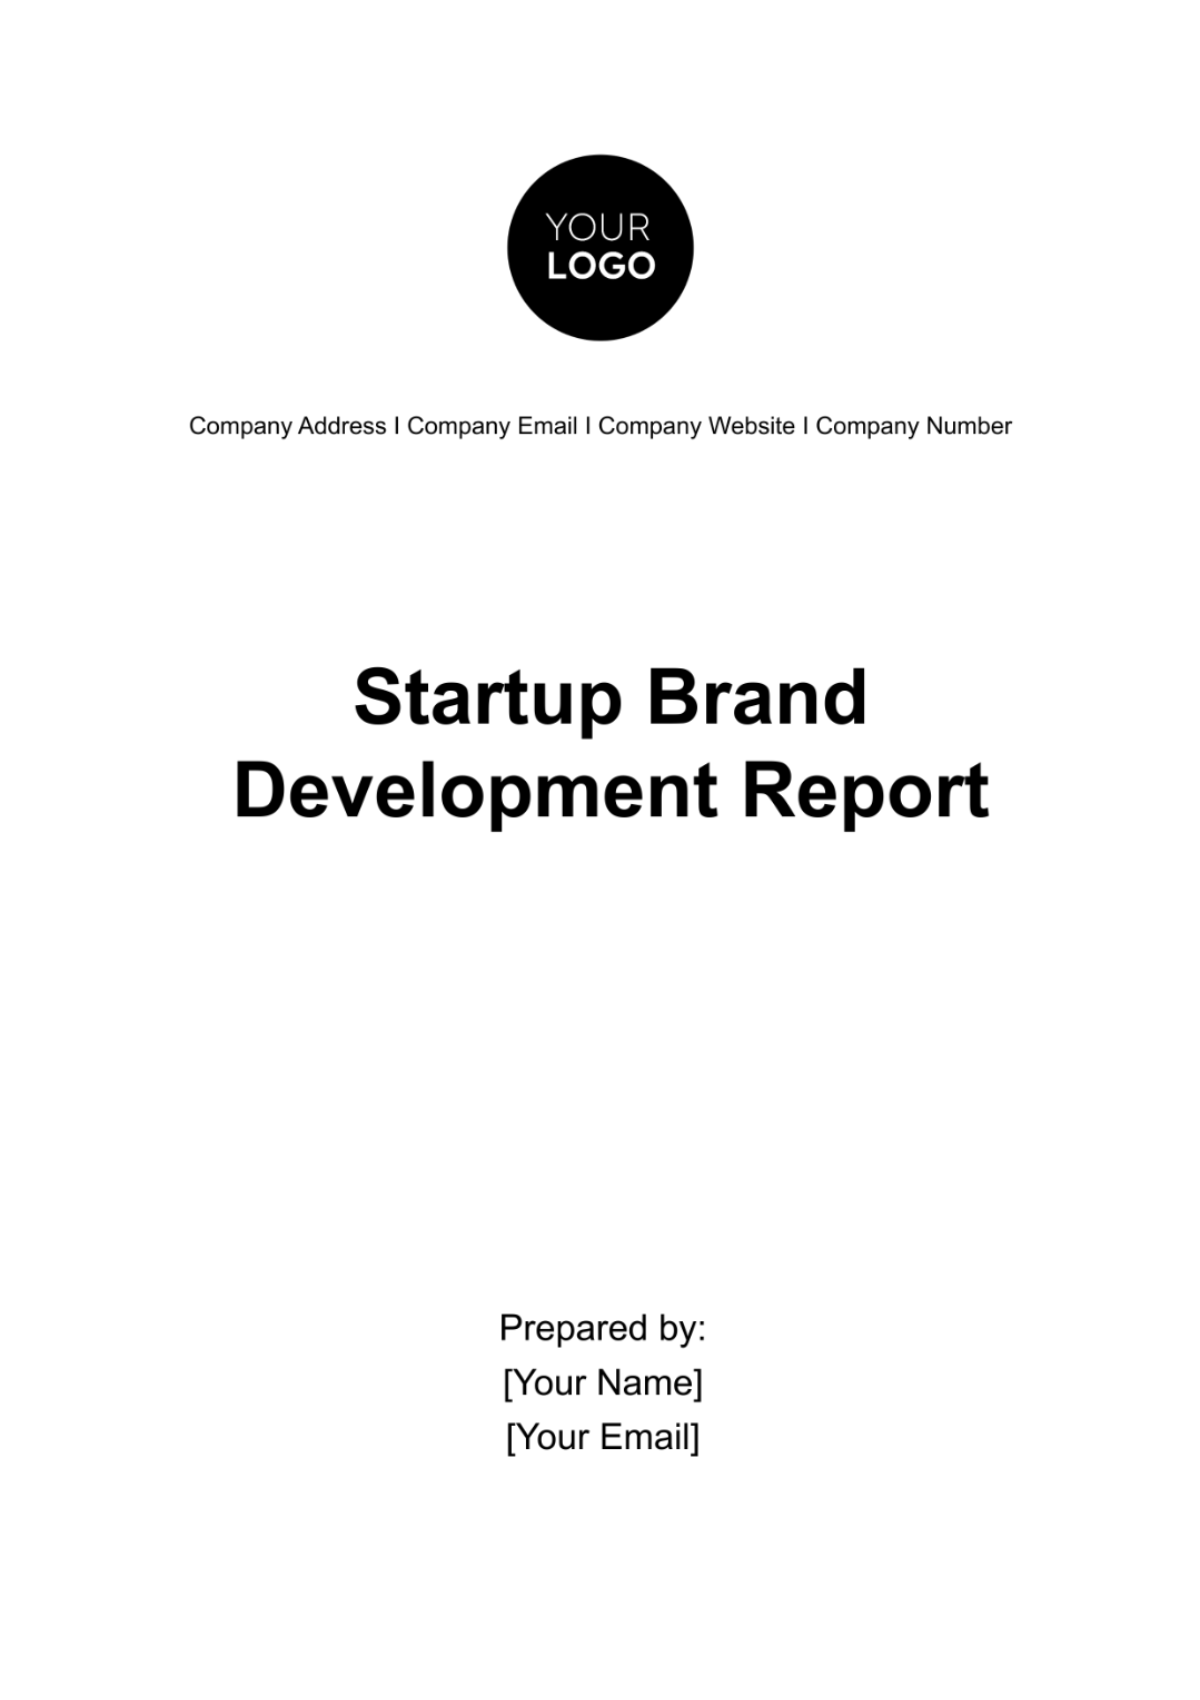 Startup Brand Development Report Template